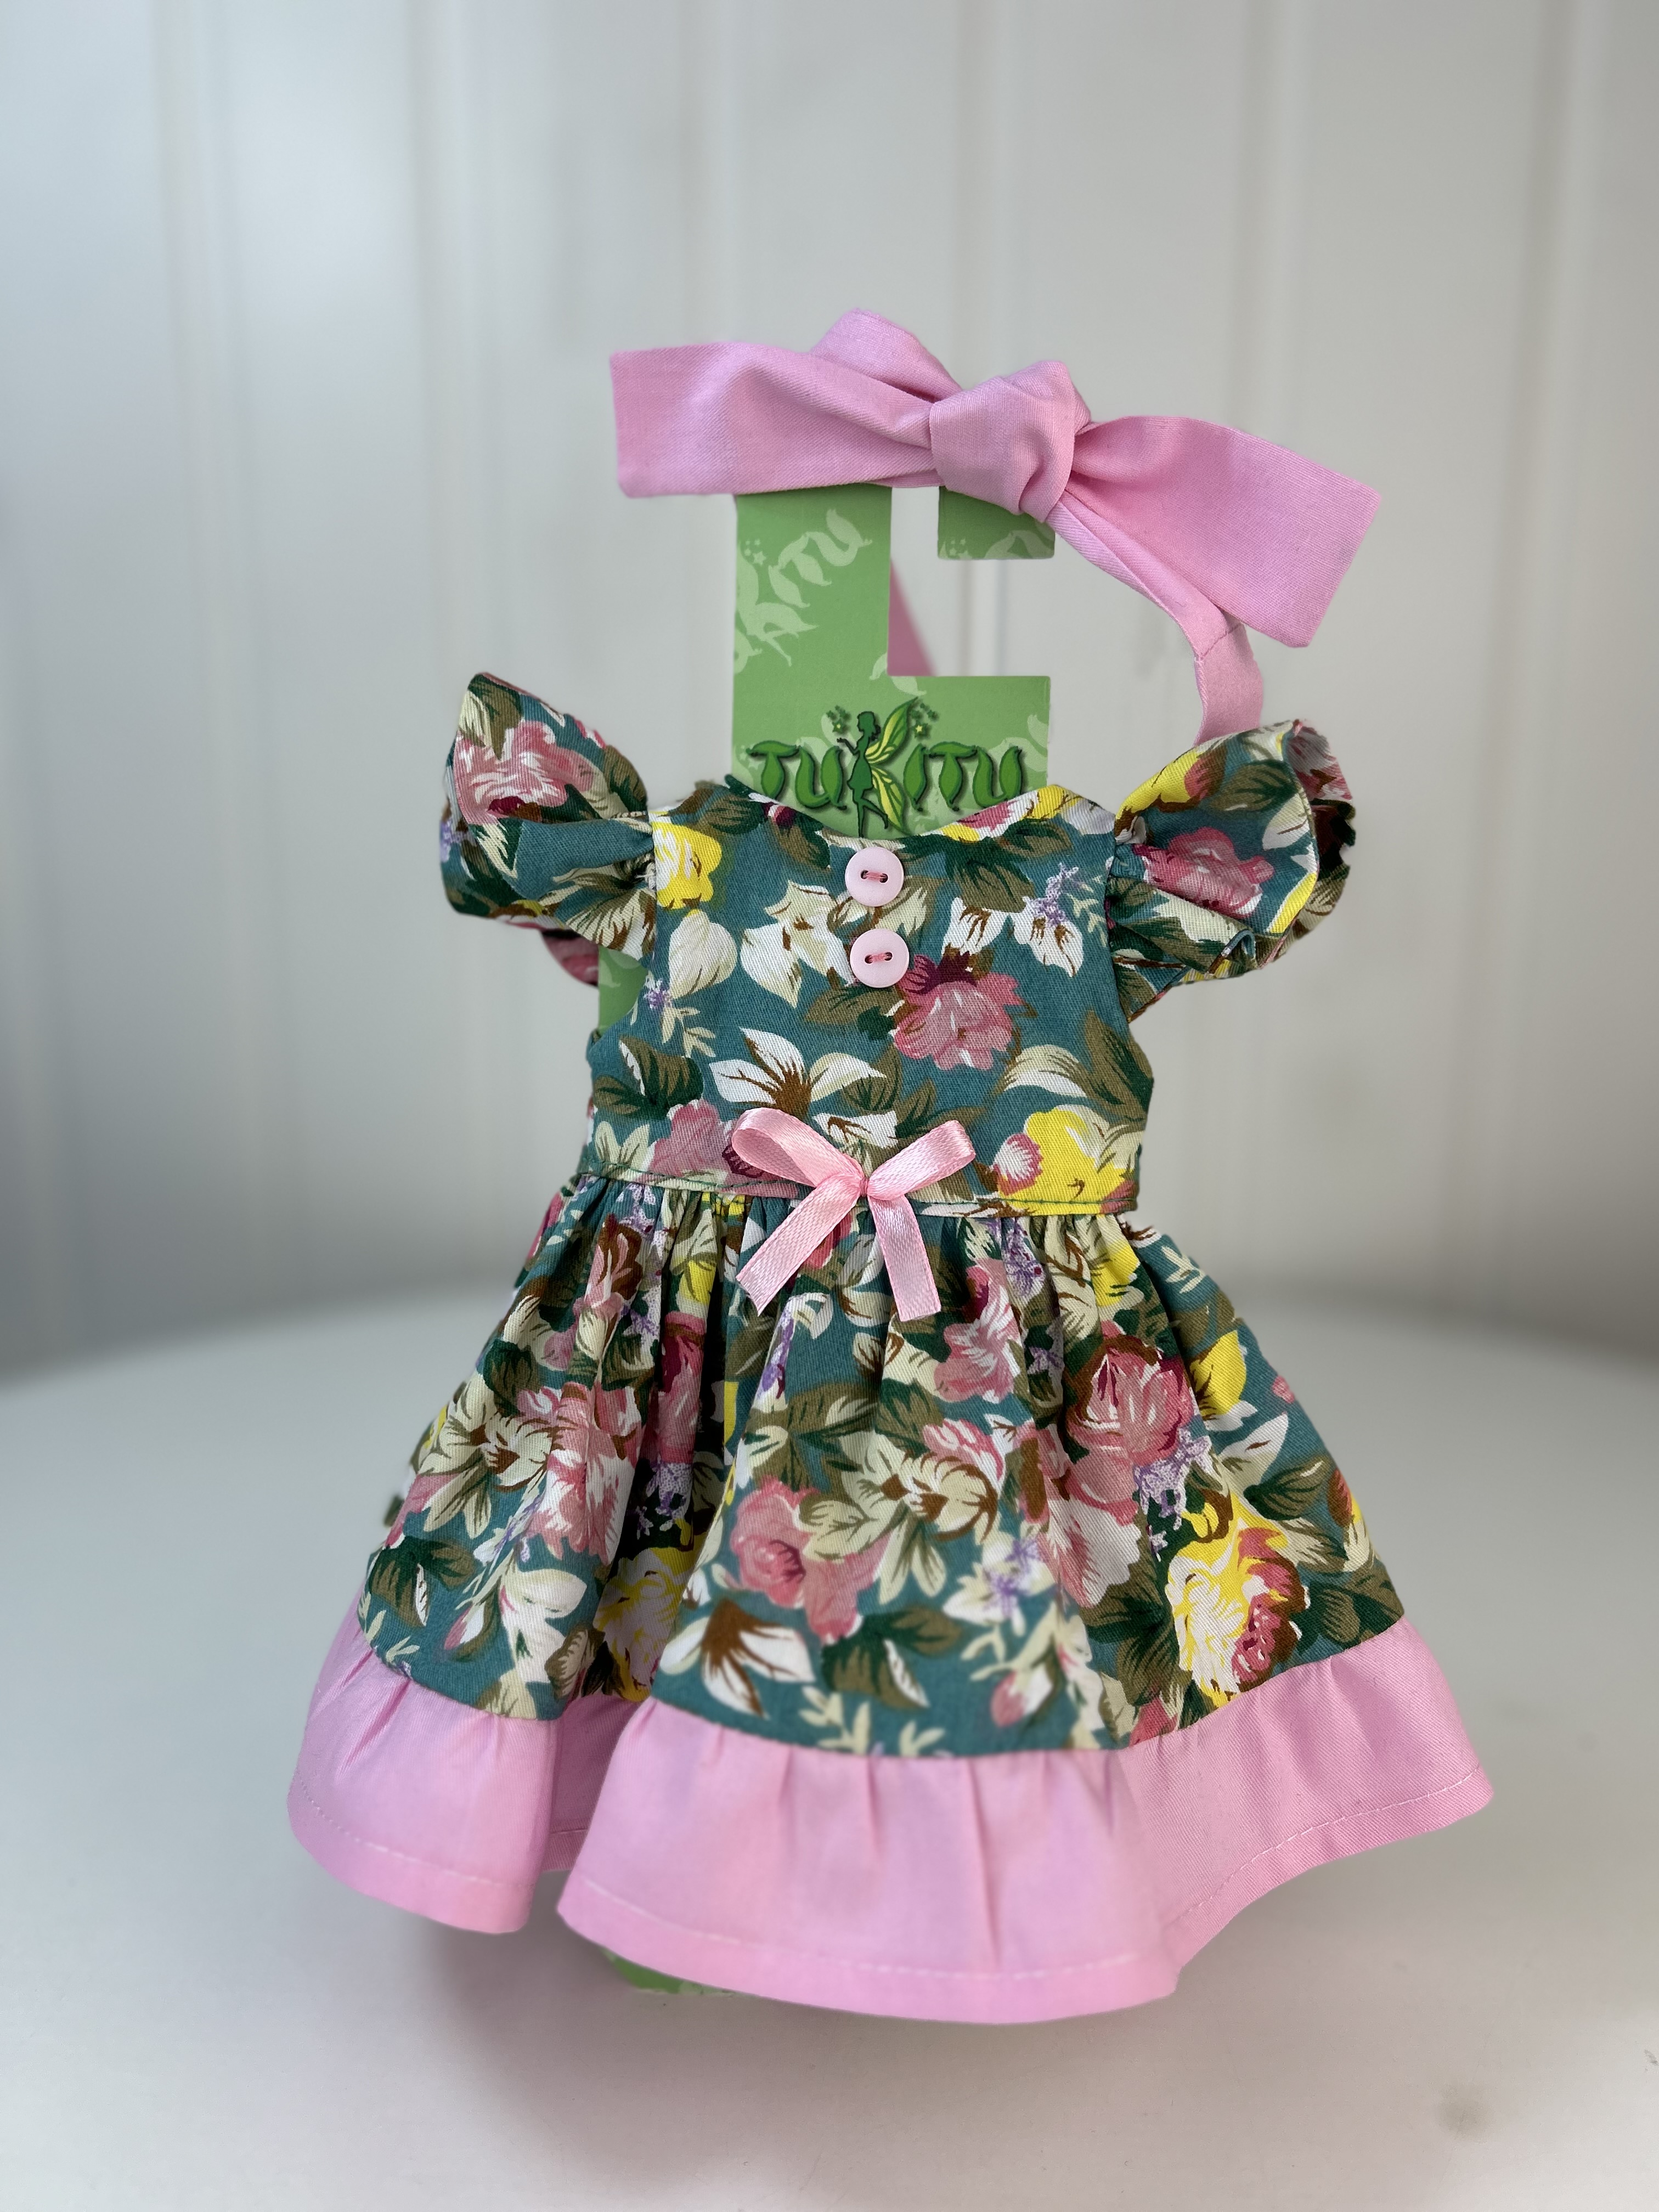 Комплект одежды для кукол TuKiTu Платье с крылышками, бант на голову, вязаная сумочка, 1 tukitu комплект одежды для кукол комбинезон топ и кепка 32 см